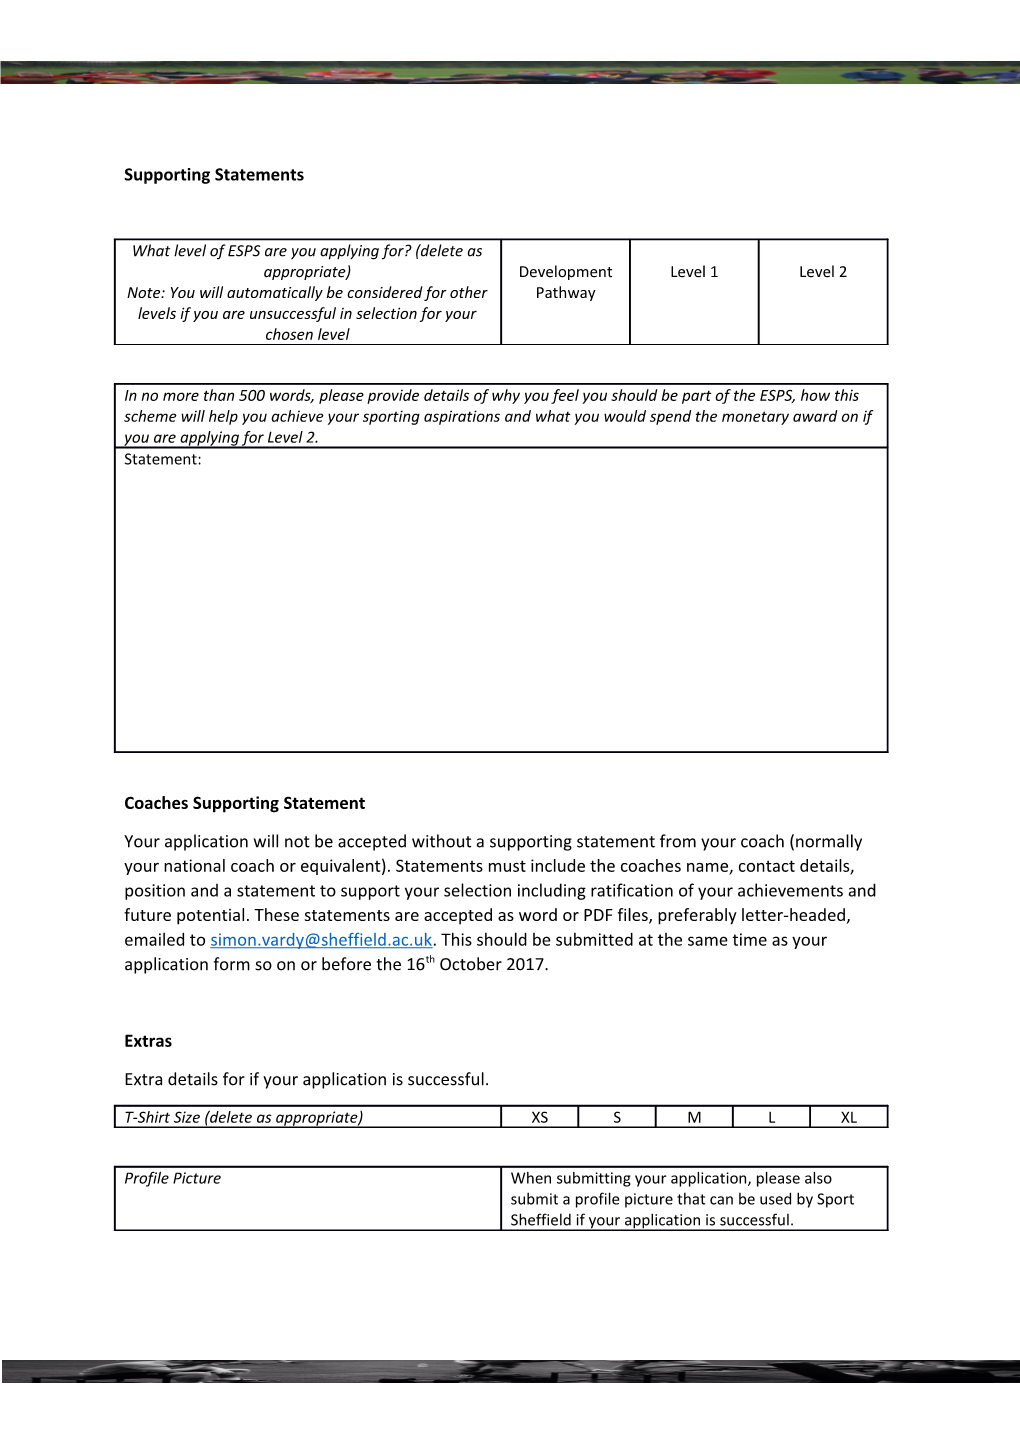 Elite Sports Performance Scheme 2017/18 Application Form